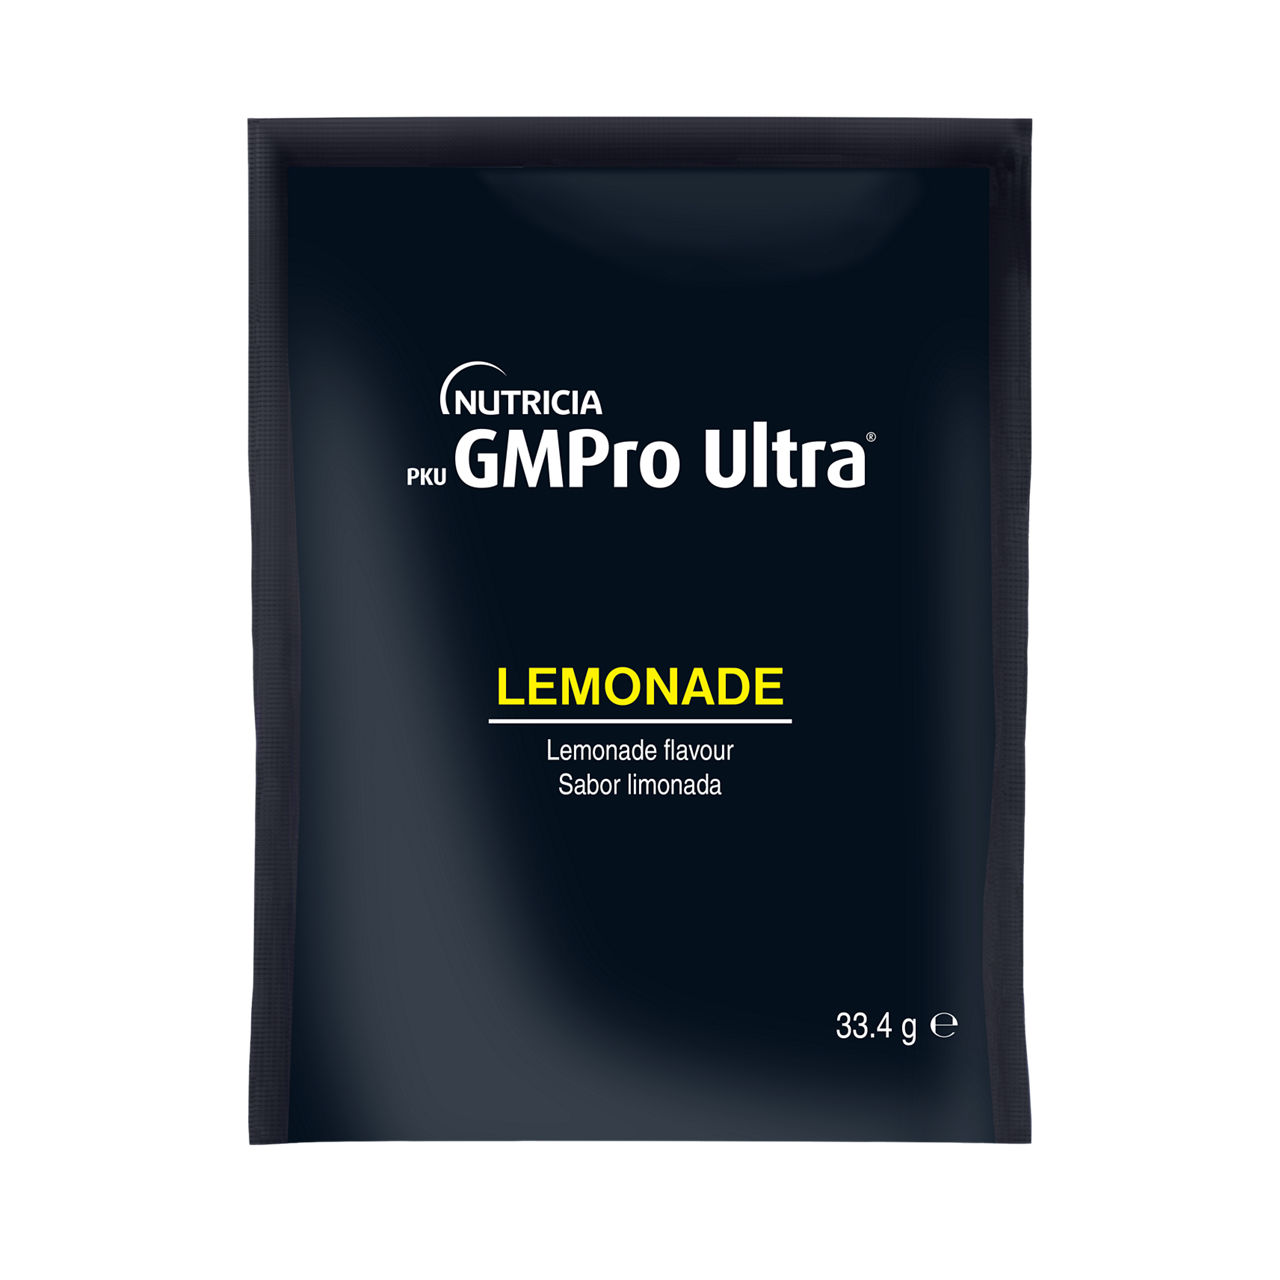 PKU GMPro Ultra Lemonade